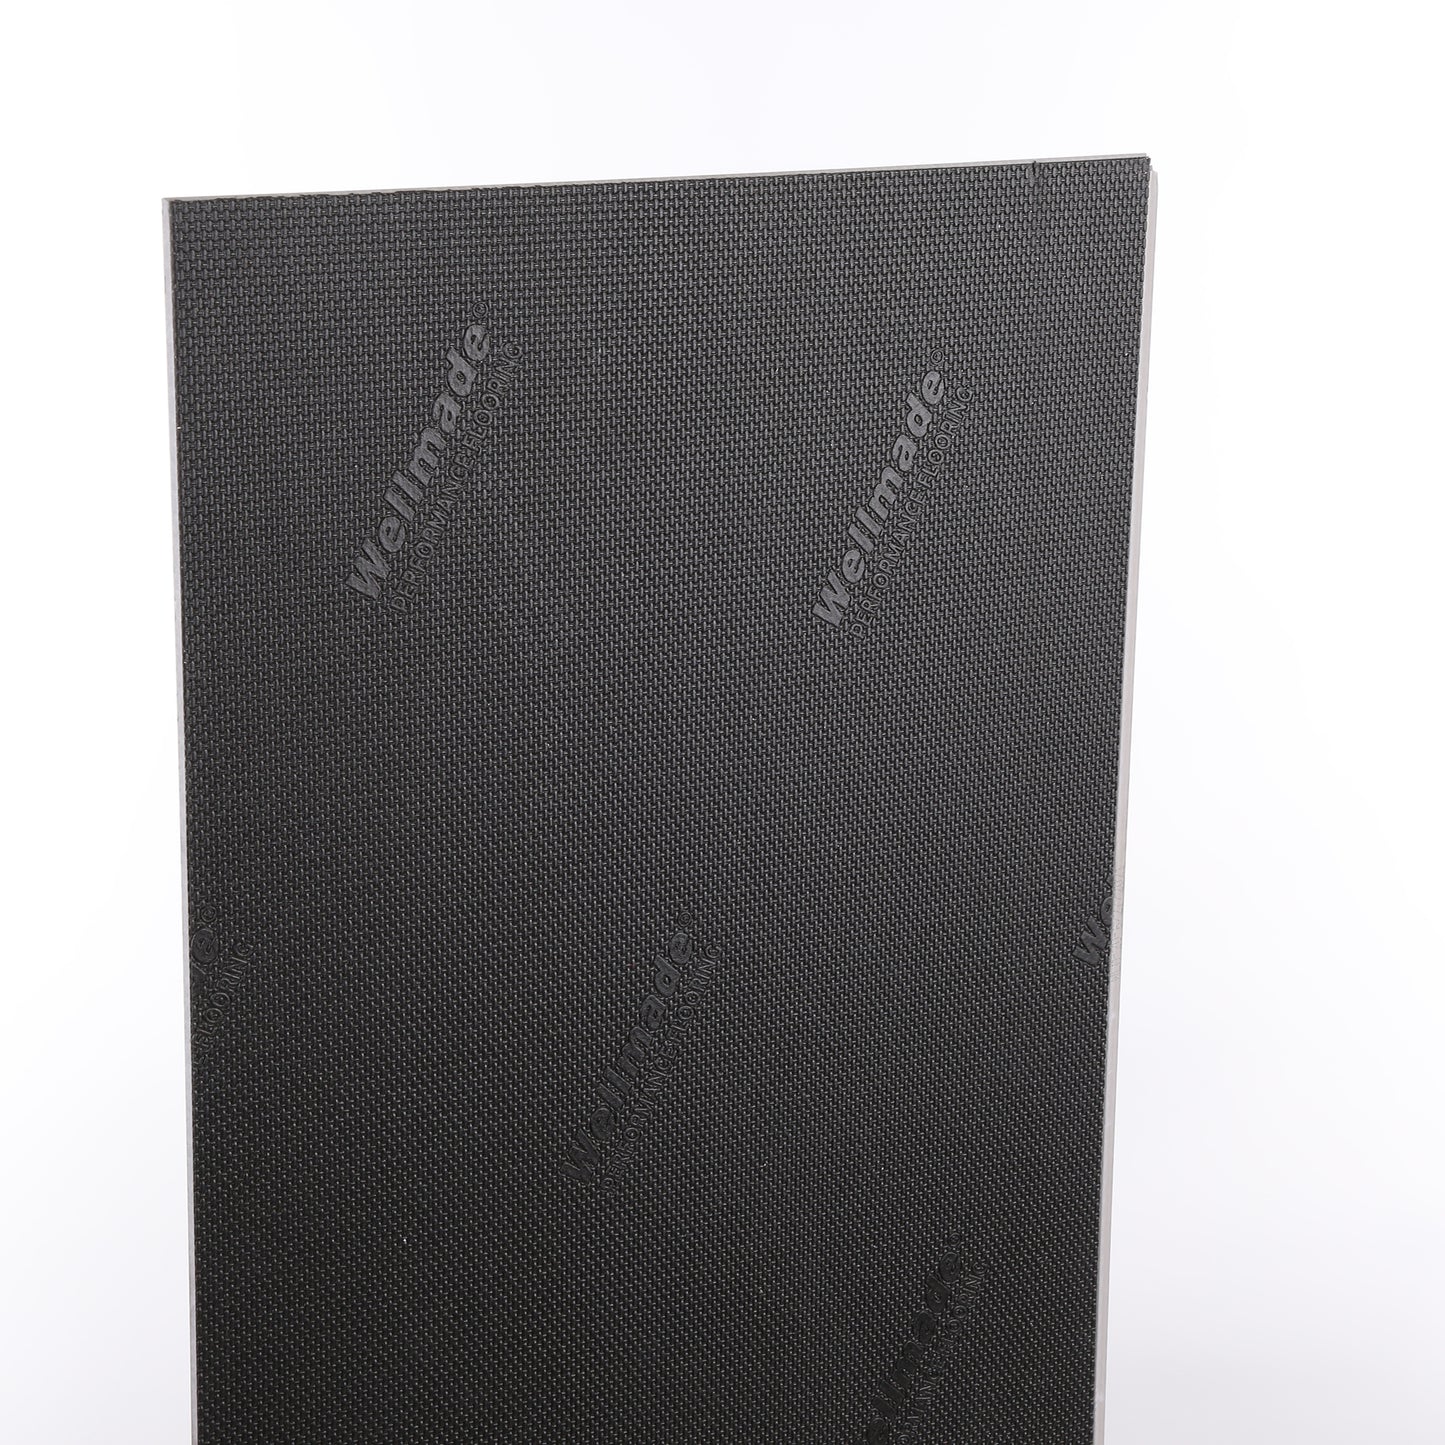 6mm Roman Colosseum HDPC® Waterproof Luxury Vinyl Tile Flooring 12 in. Wide x 24 in. Long